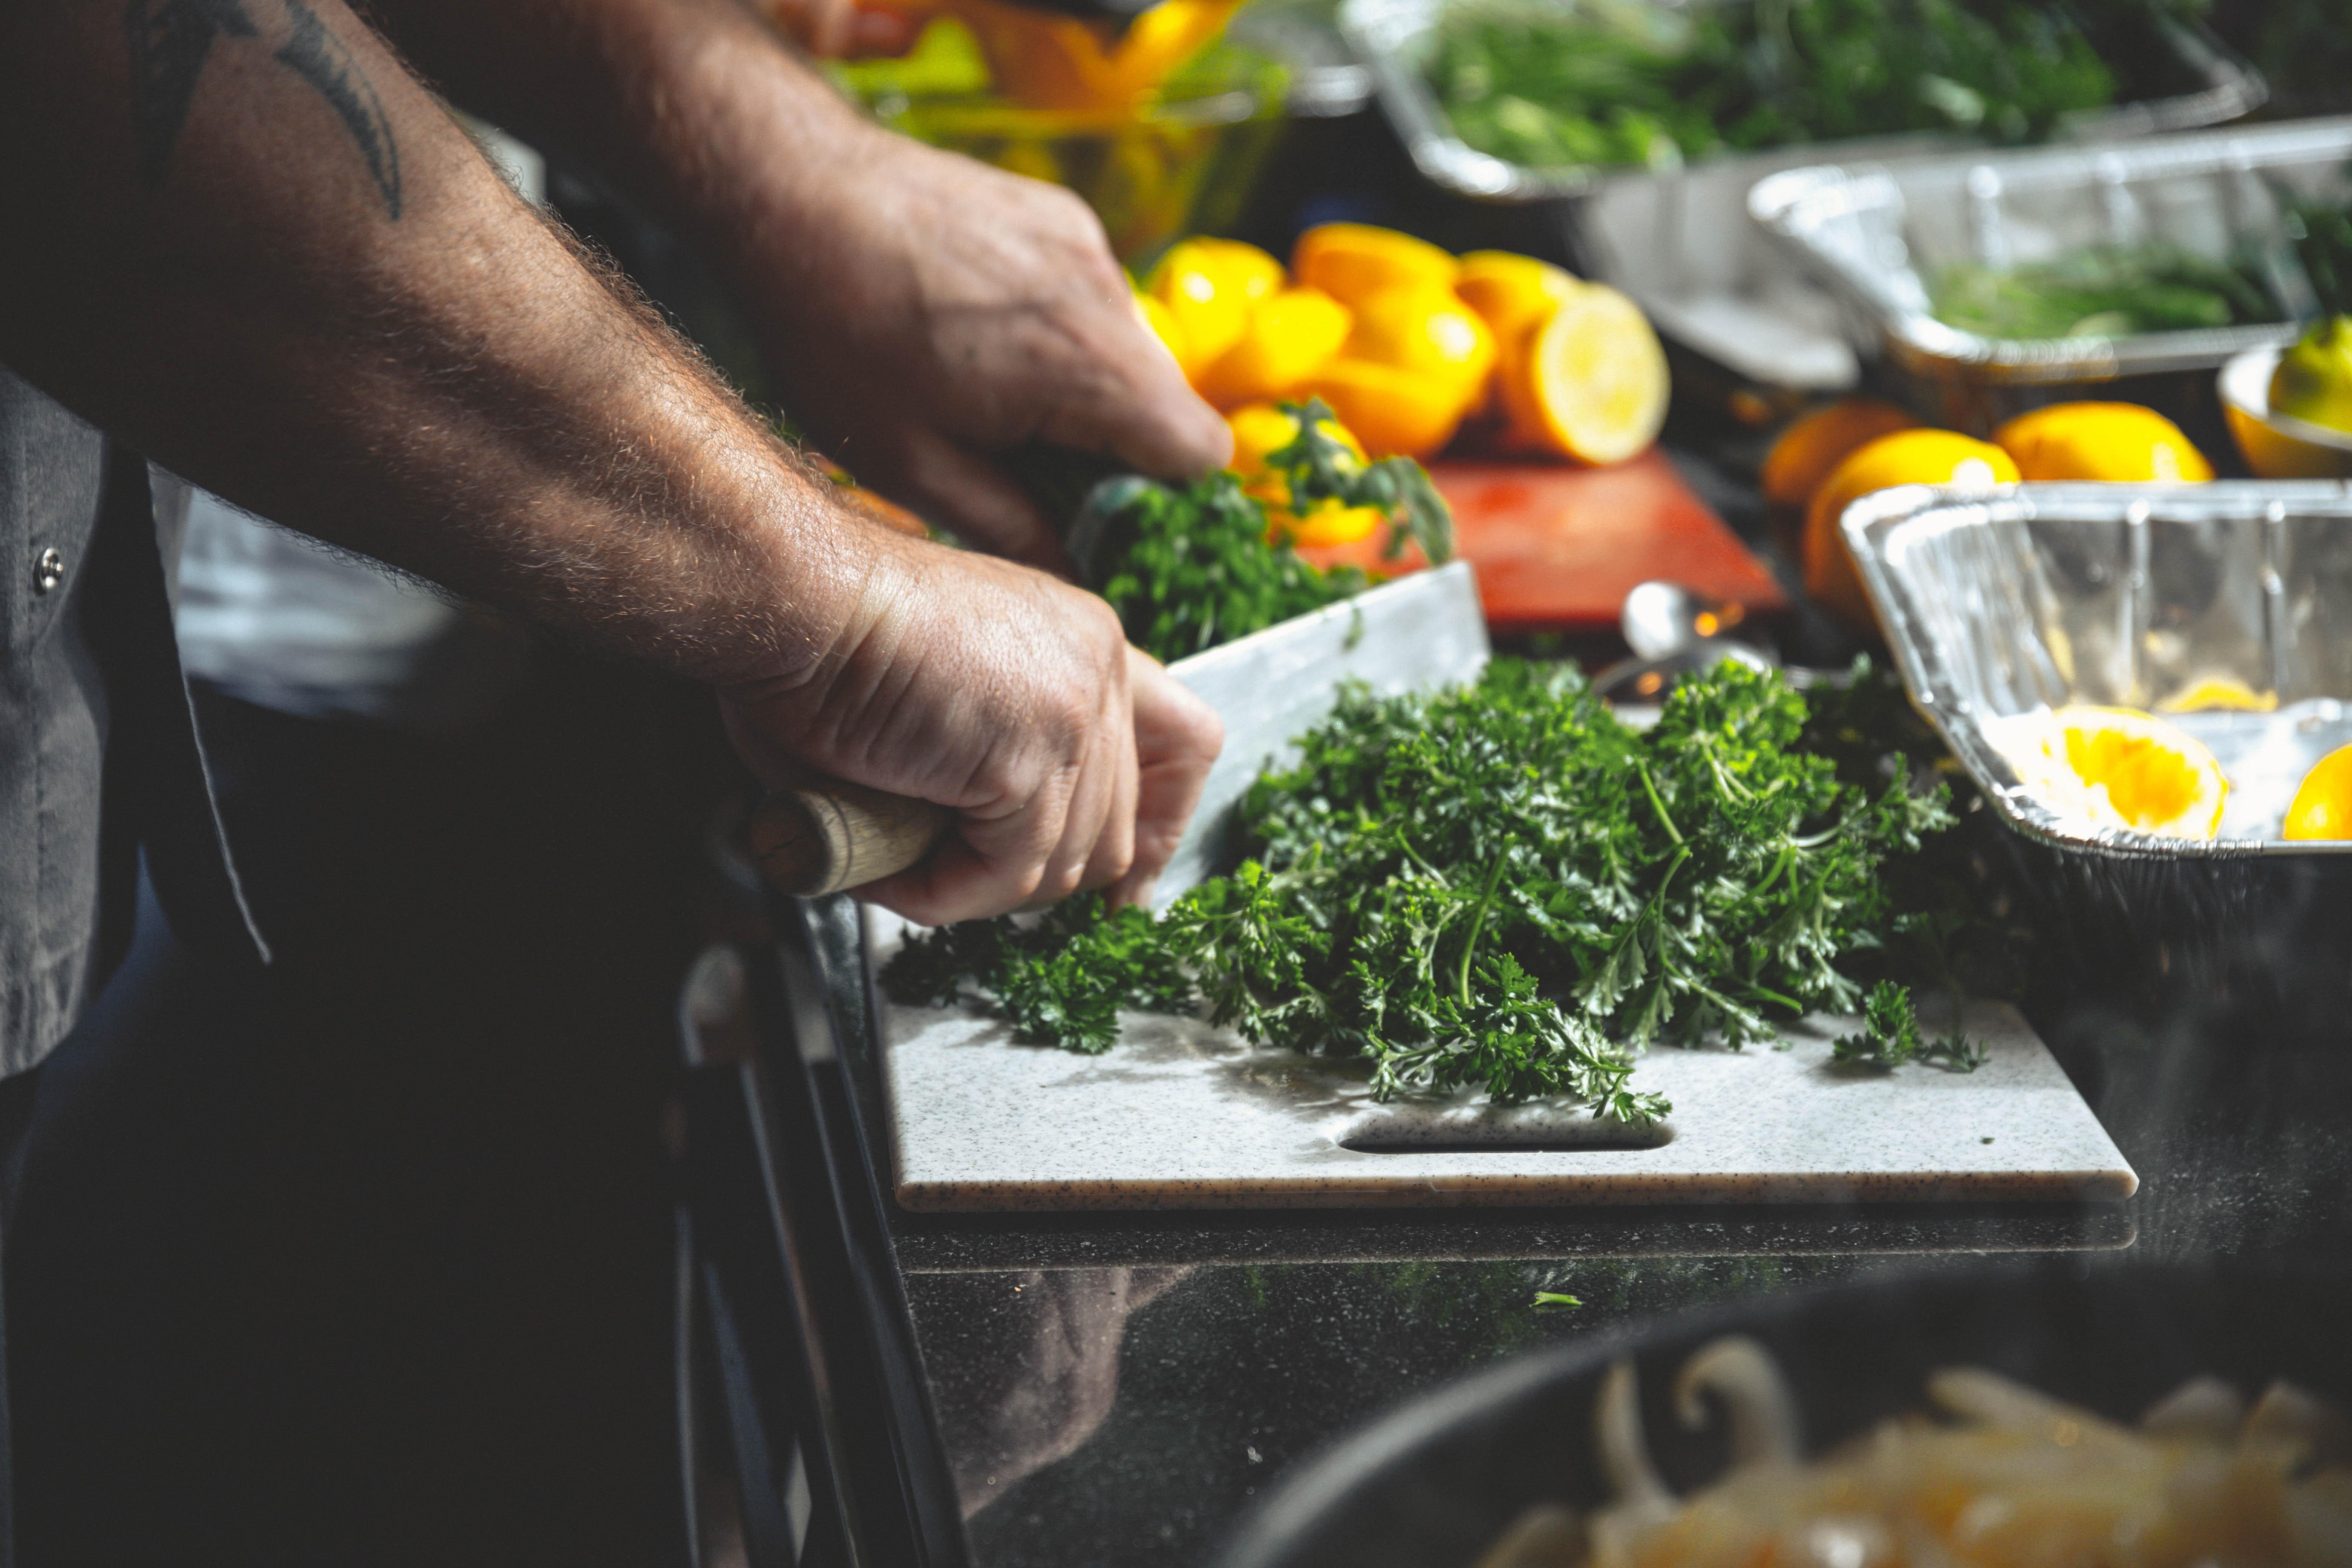 Chef in kitchen cutting vegetables - food waste 